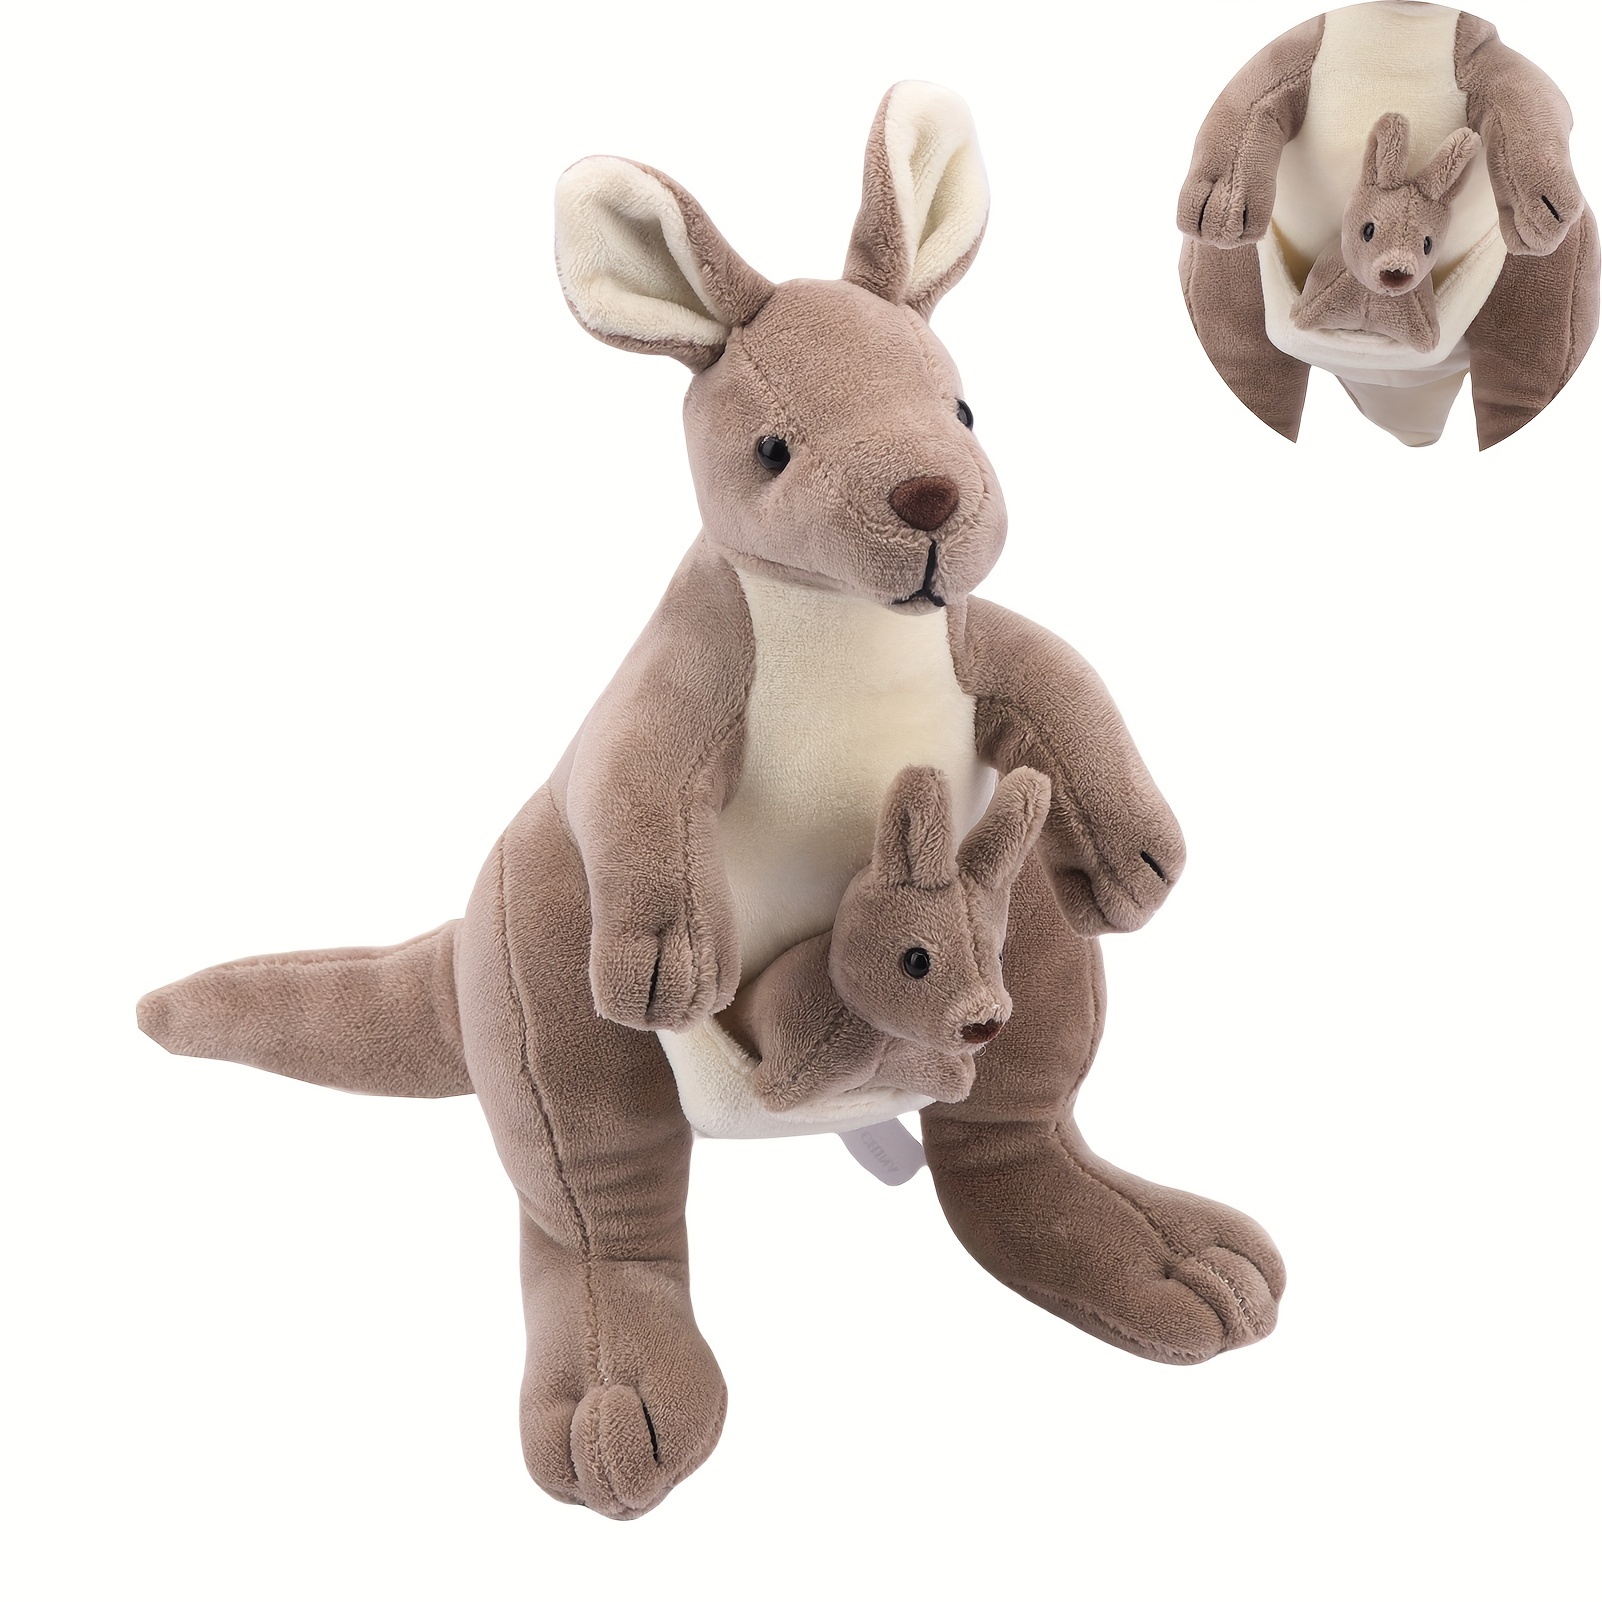 

25cm/9.84in Kangaroo Plush Toys Stuffed Animals Kangaroo With 1 Baby Plush Huggable Kangaroo Toy Special Day For Kids, Preschool Birthday Gifts For Kids